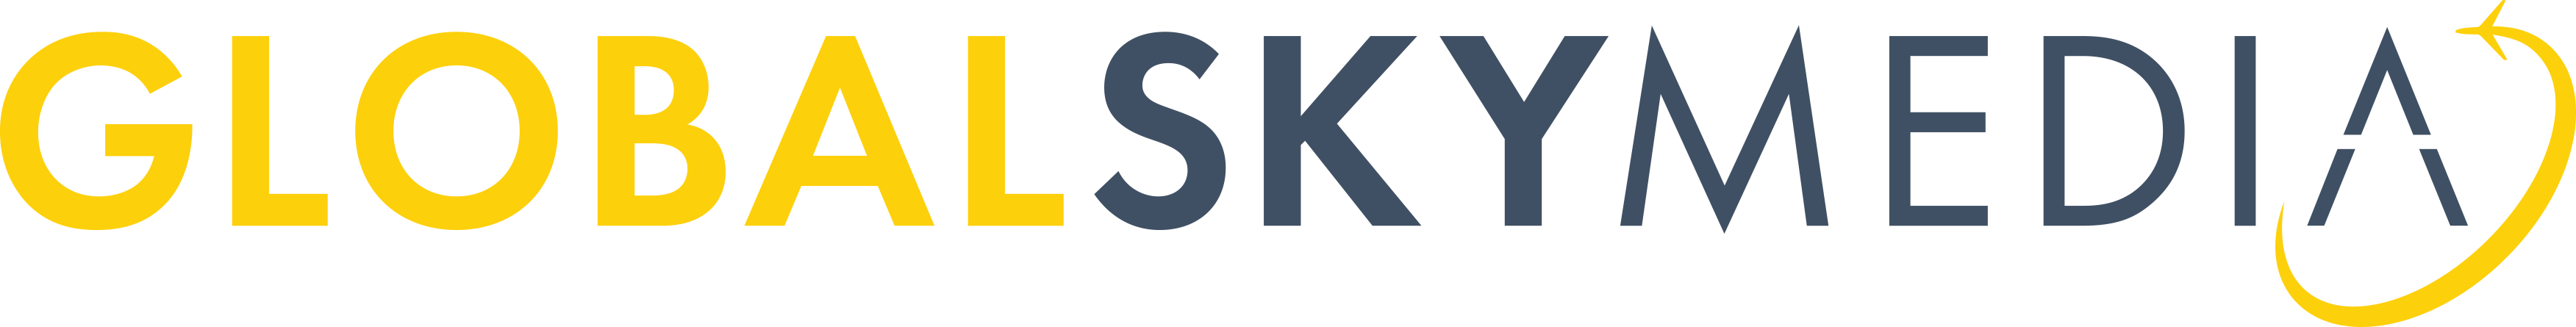 Asian Sky Media Ltd. logo